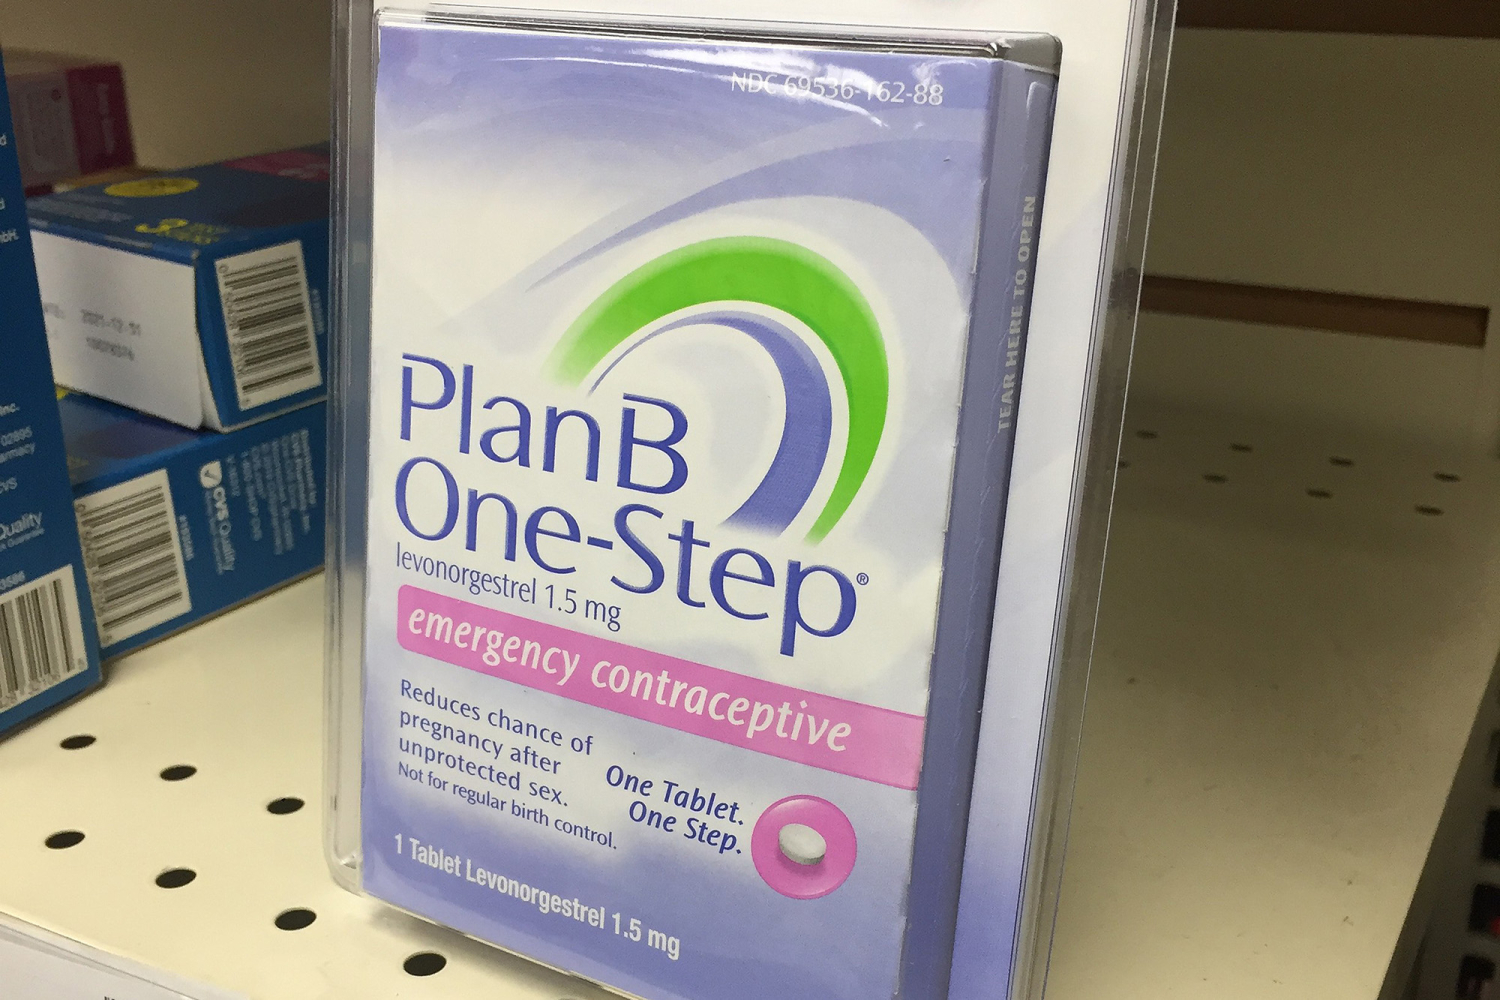 https://www.wfyi.org/files/wfyi/articles/original/2448px-plan-b-contraceptive-birth-control-pill-on-pharmacy-shelves.jpeg